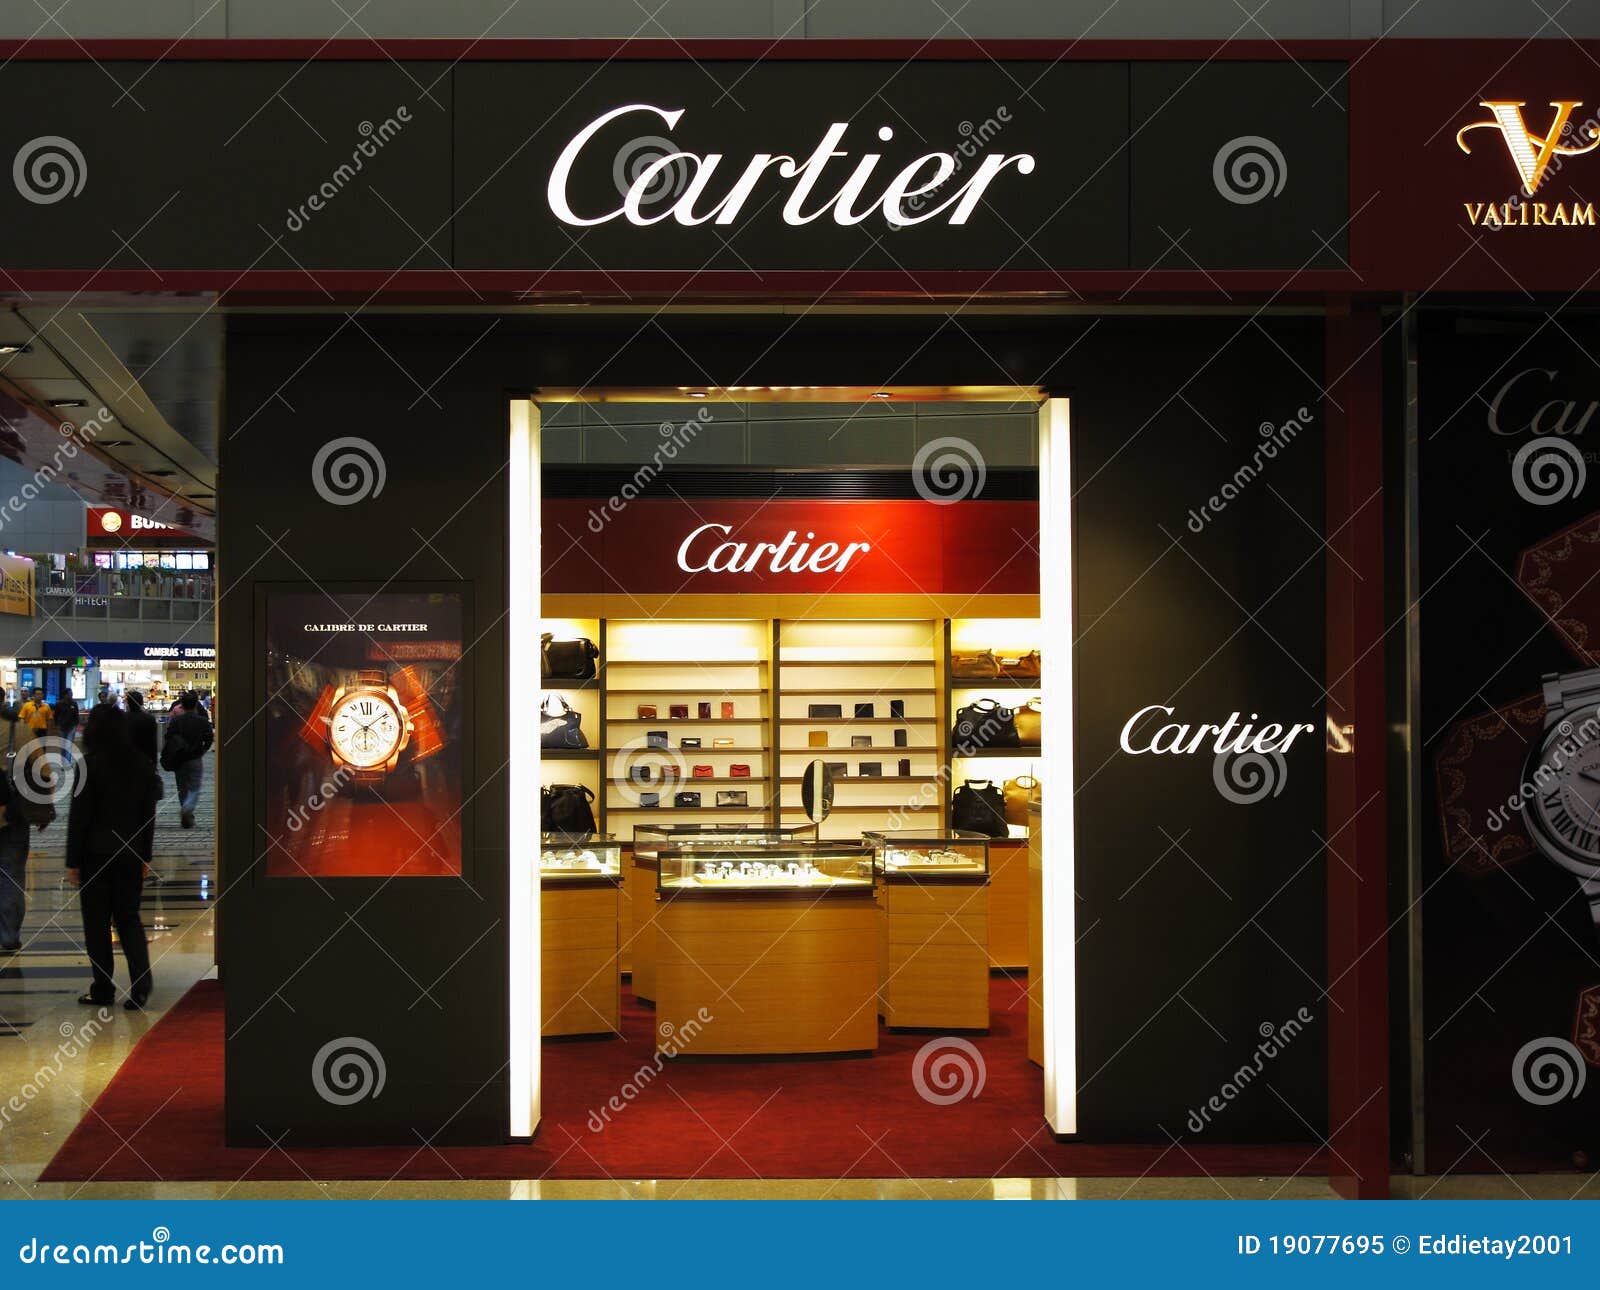 cartier brand image